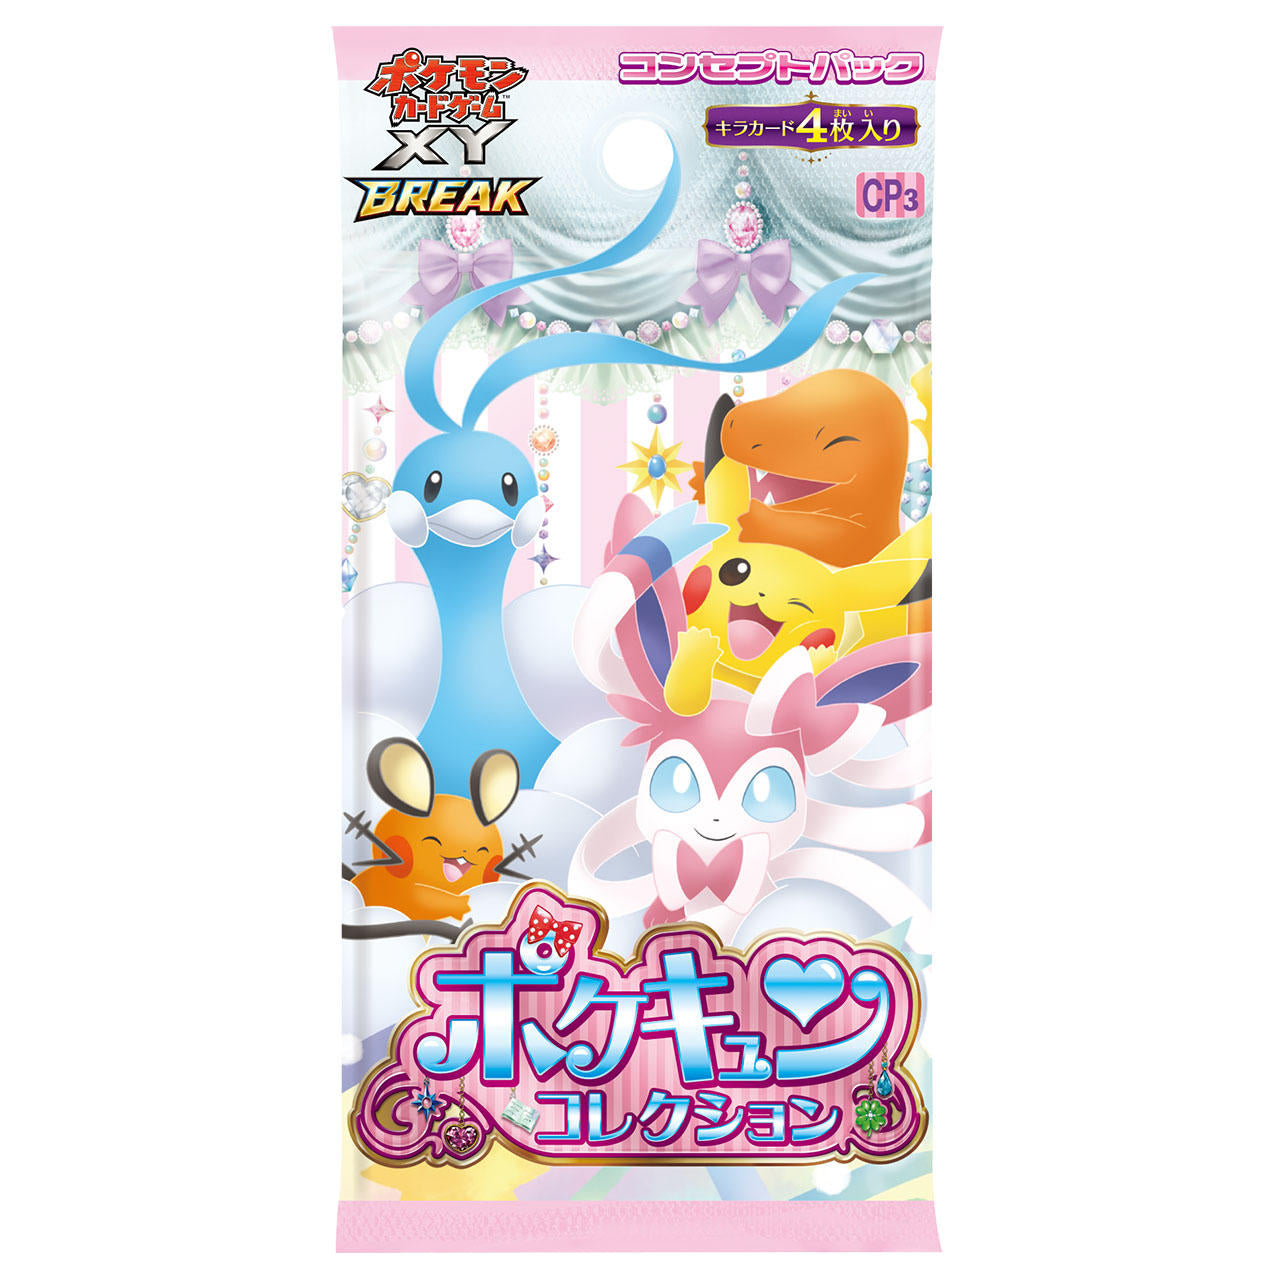 POKÉMON CARD GAME - Japanese Pokémon cards - Cartes Pokémon japonaises